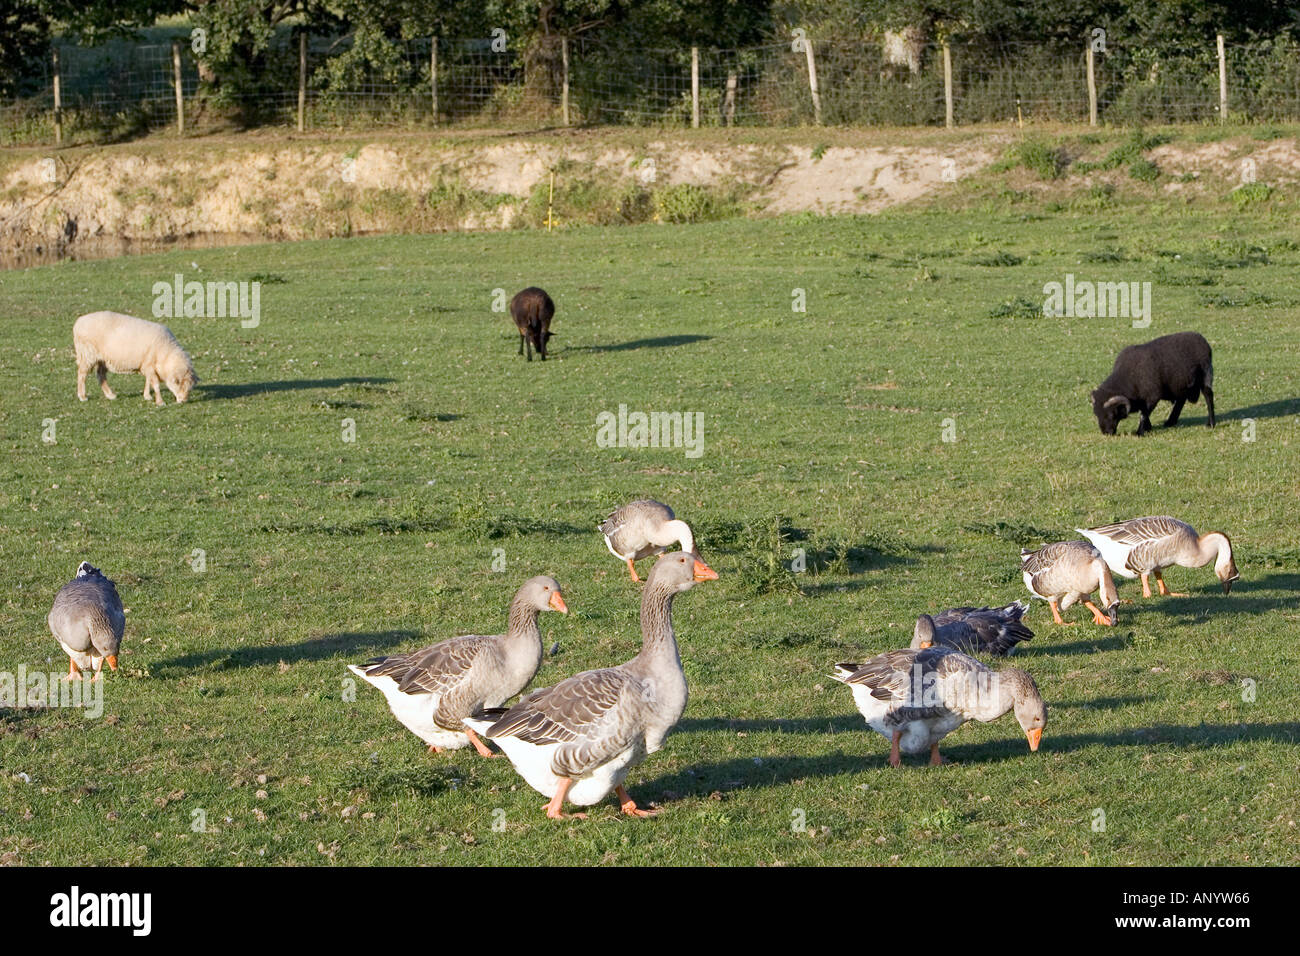 Geese and sheep farm Britanny France Free range birds may be at risk if Avian Flu Bird Flu Virus spreads Stock Photo